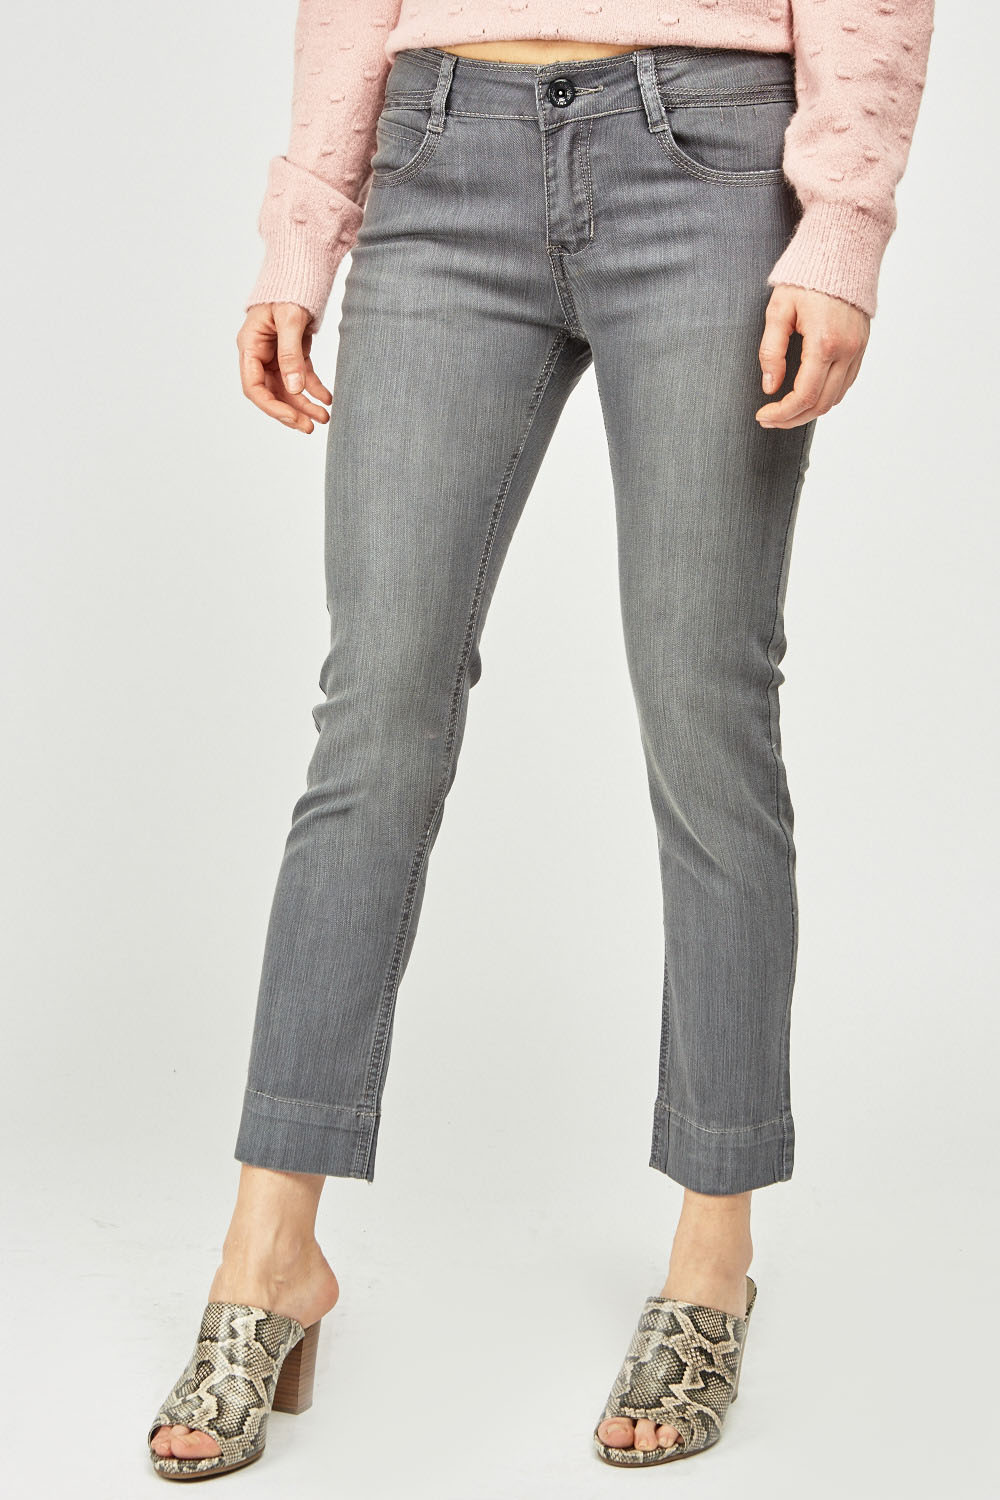 Skinny Grey Ankle Grazer Jeans - Just $7